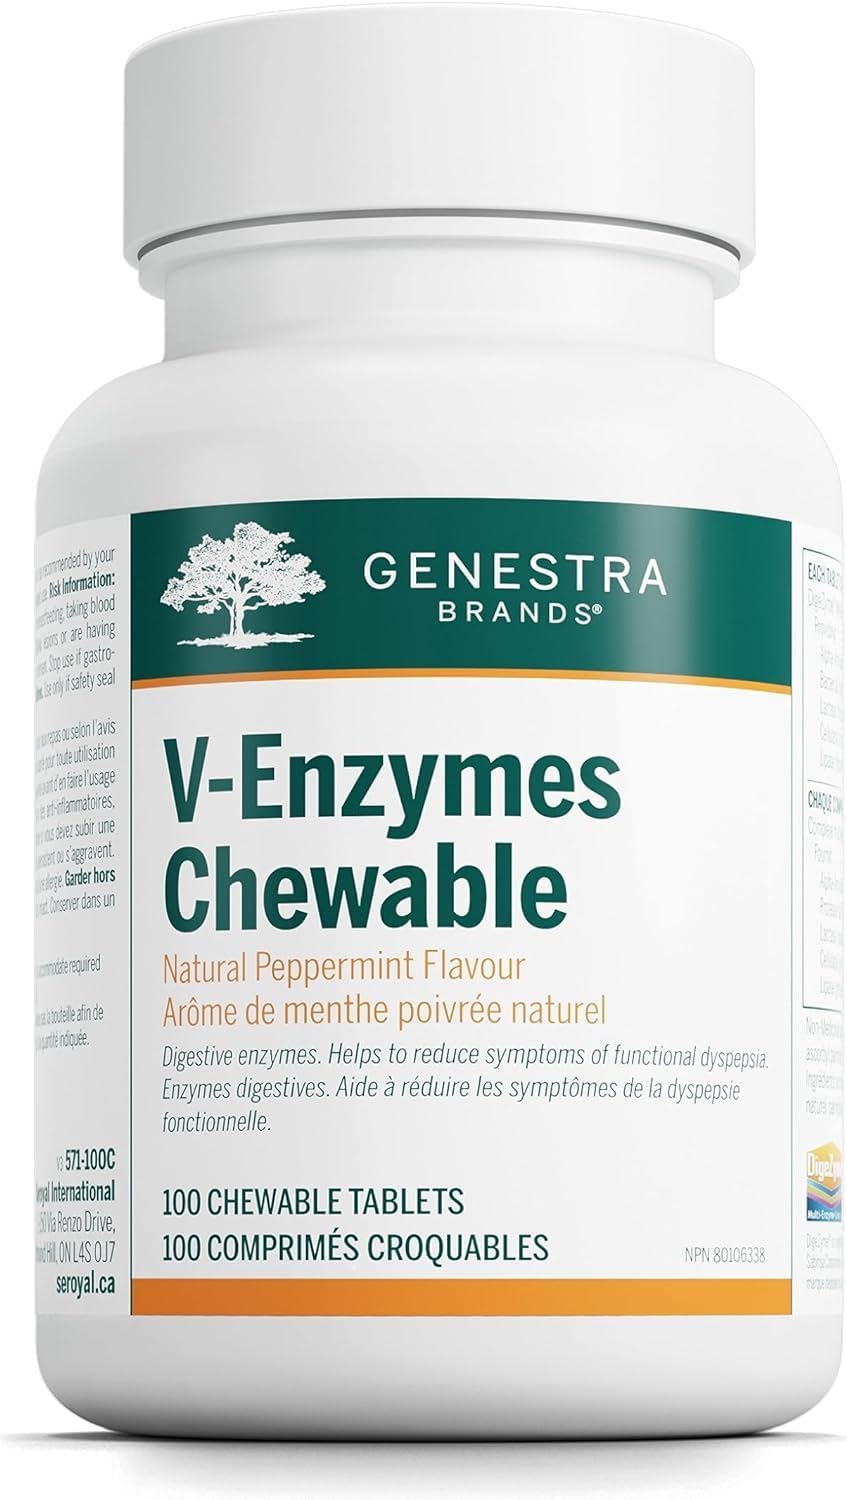 Genestra Brands V-Enzymes Chewable, 100 tabs

36.29 Grams